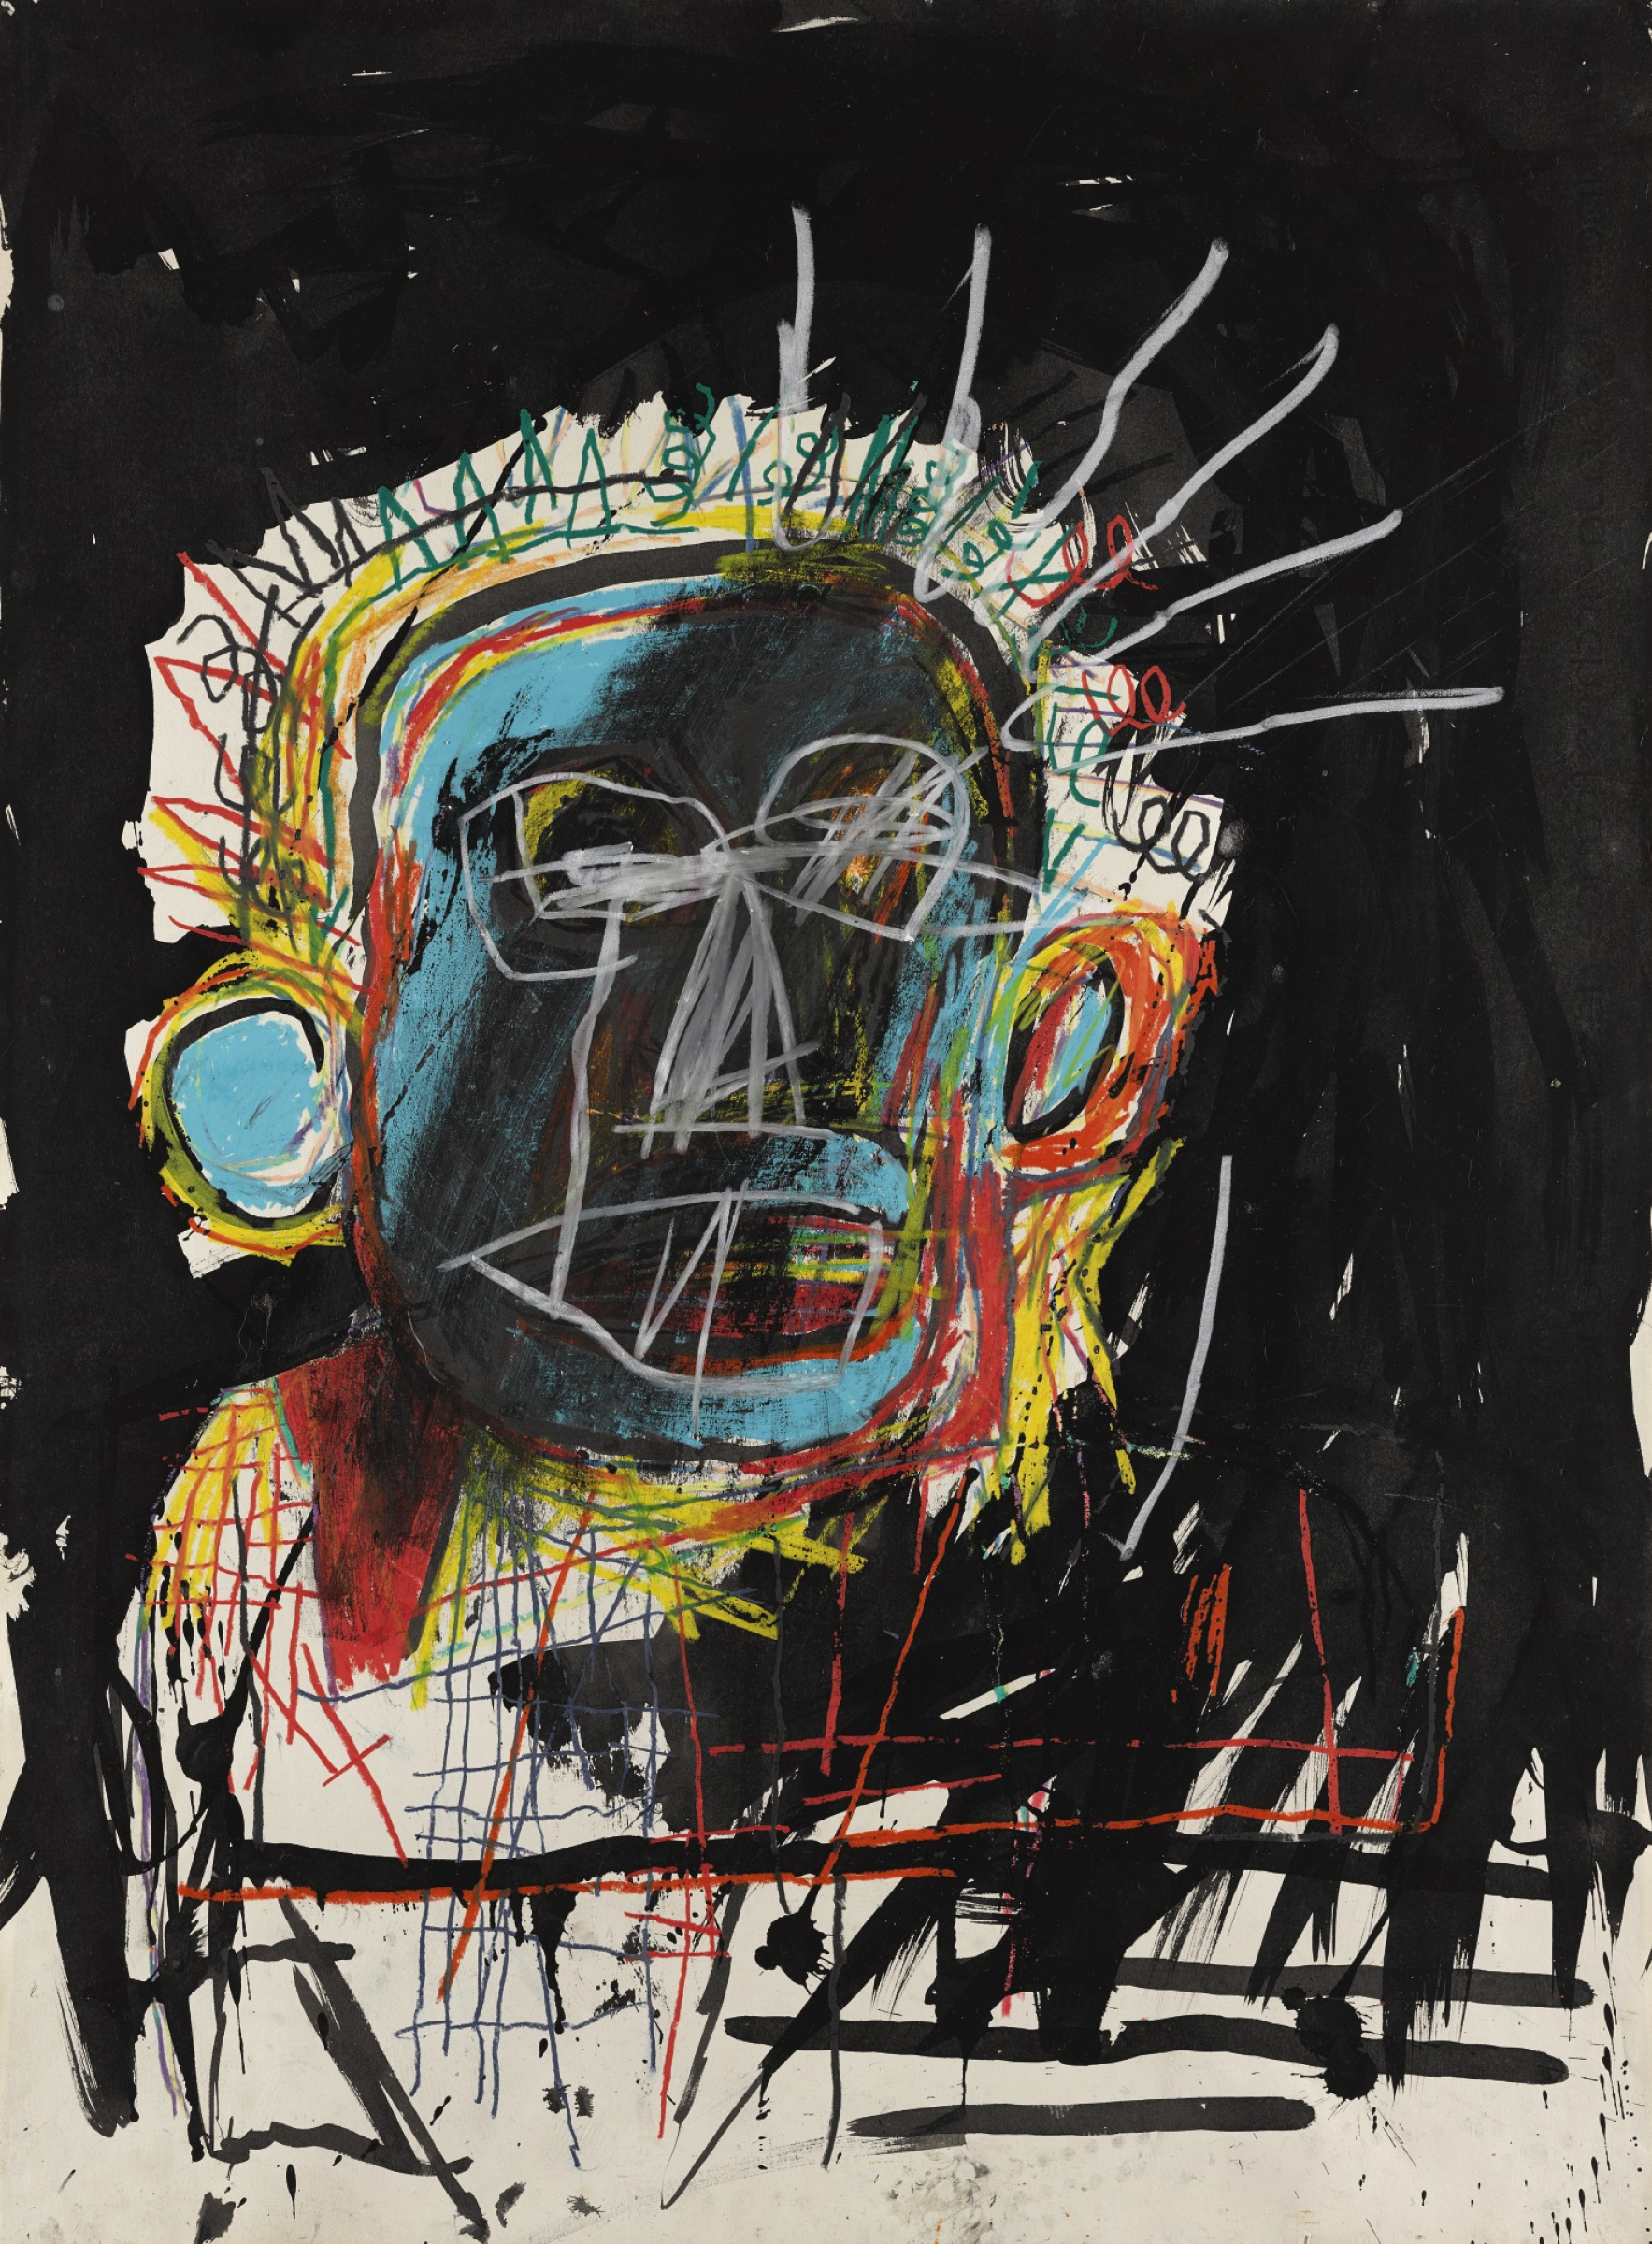 Jean-michel Basquiat "Untitled" (1982)